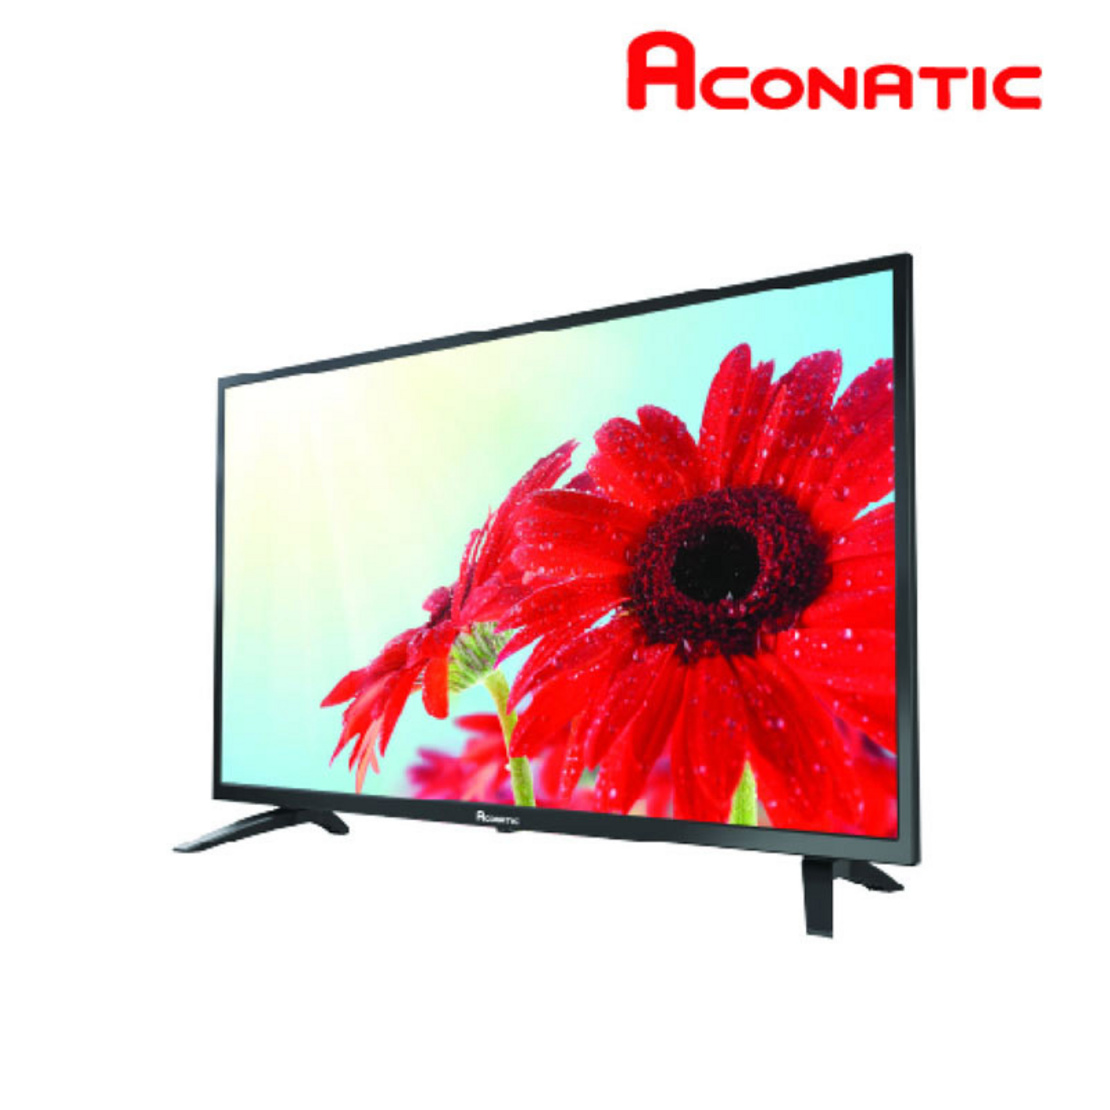 Aconatic Digital Hd Tv ขนาด 32 นิ้ว รุ่น 32hd513an Allonline